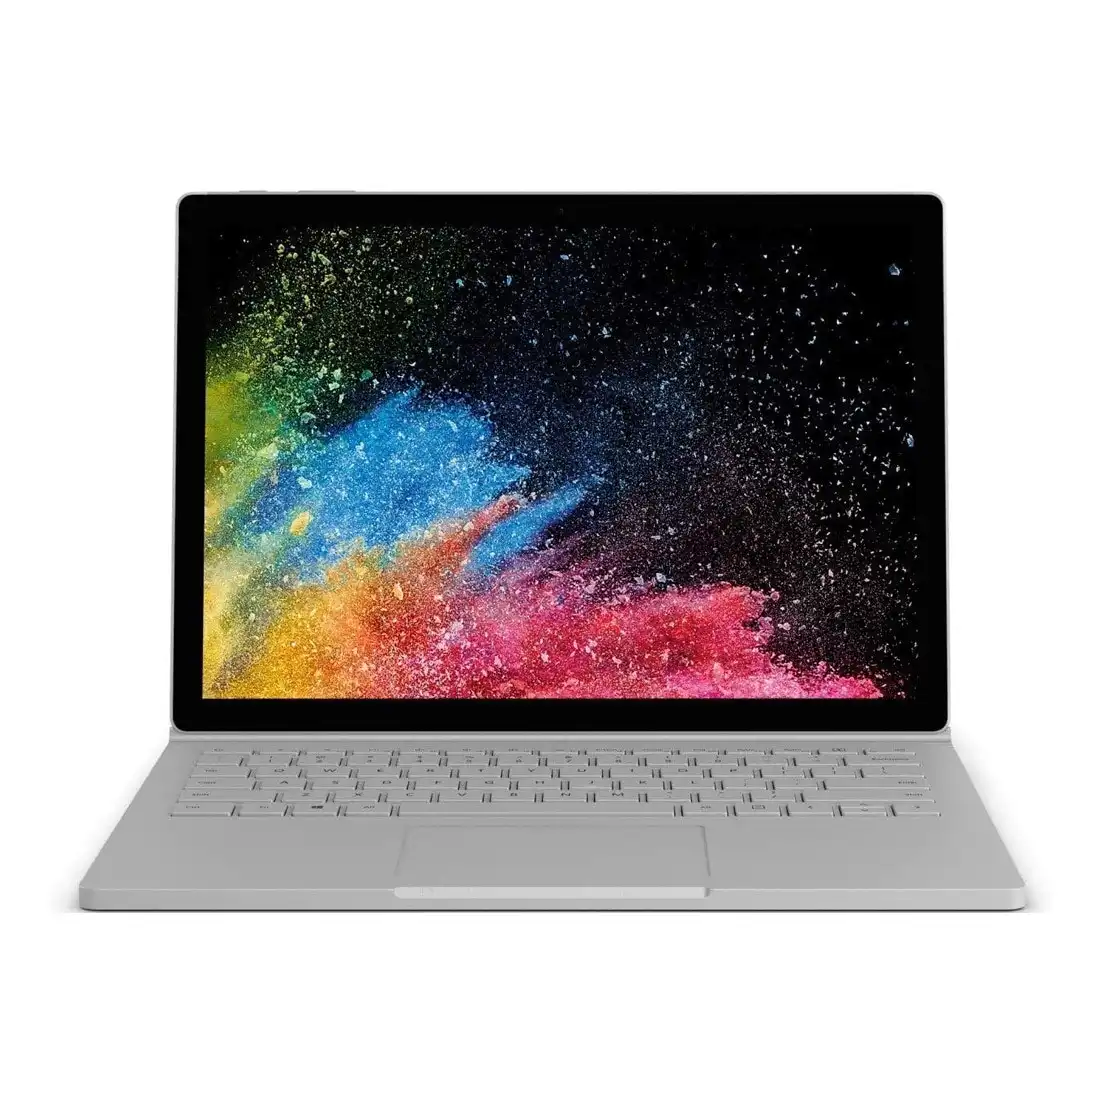 Microsoft Surface Book 2 (13", i5-8350U, 256GB/8GB, PGY-00008) Platinum [Refurbished] - Excellent